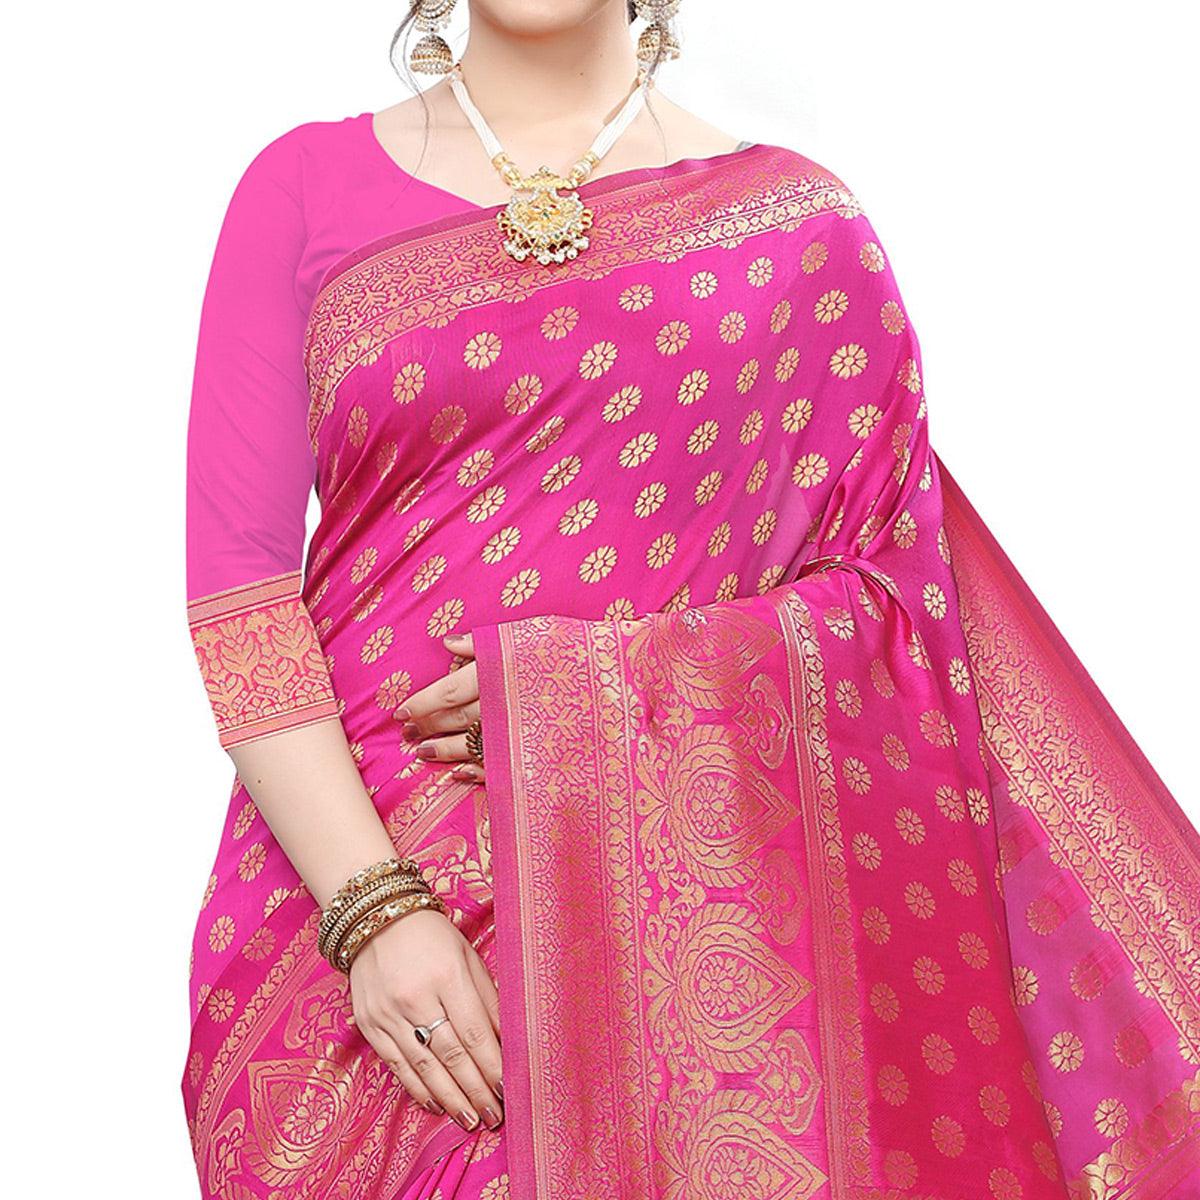 Flamboyant Pink Colored Festive Wear Woven Art Silk Saree - Peachmode